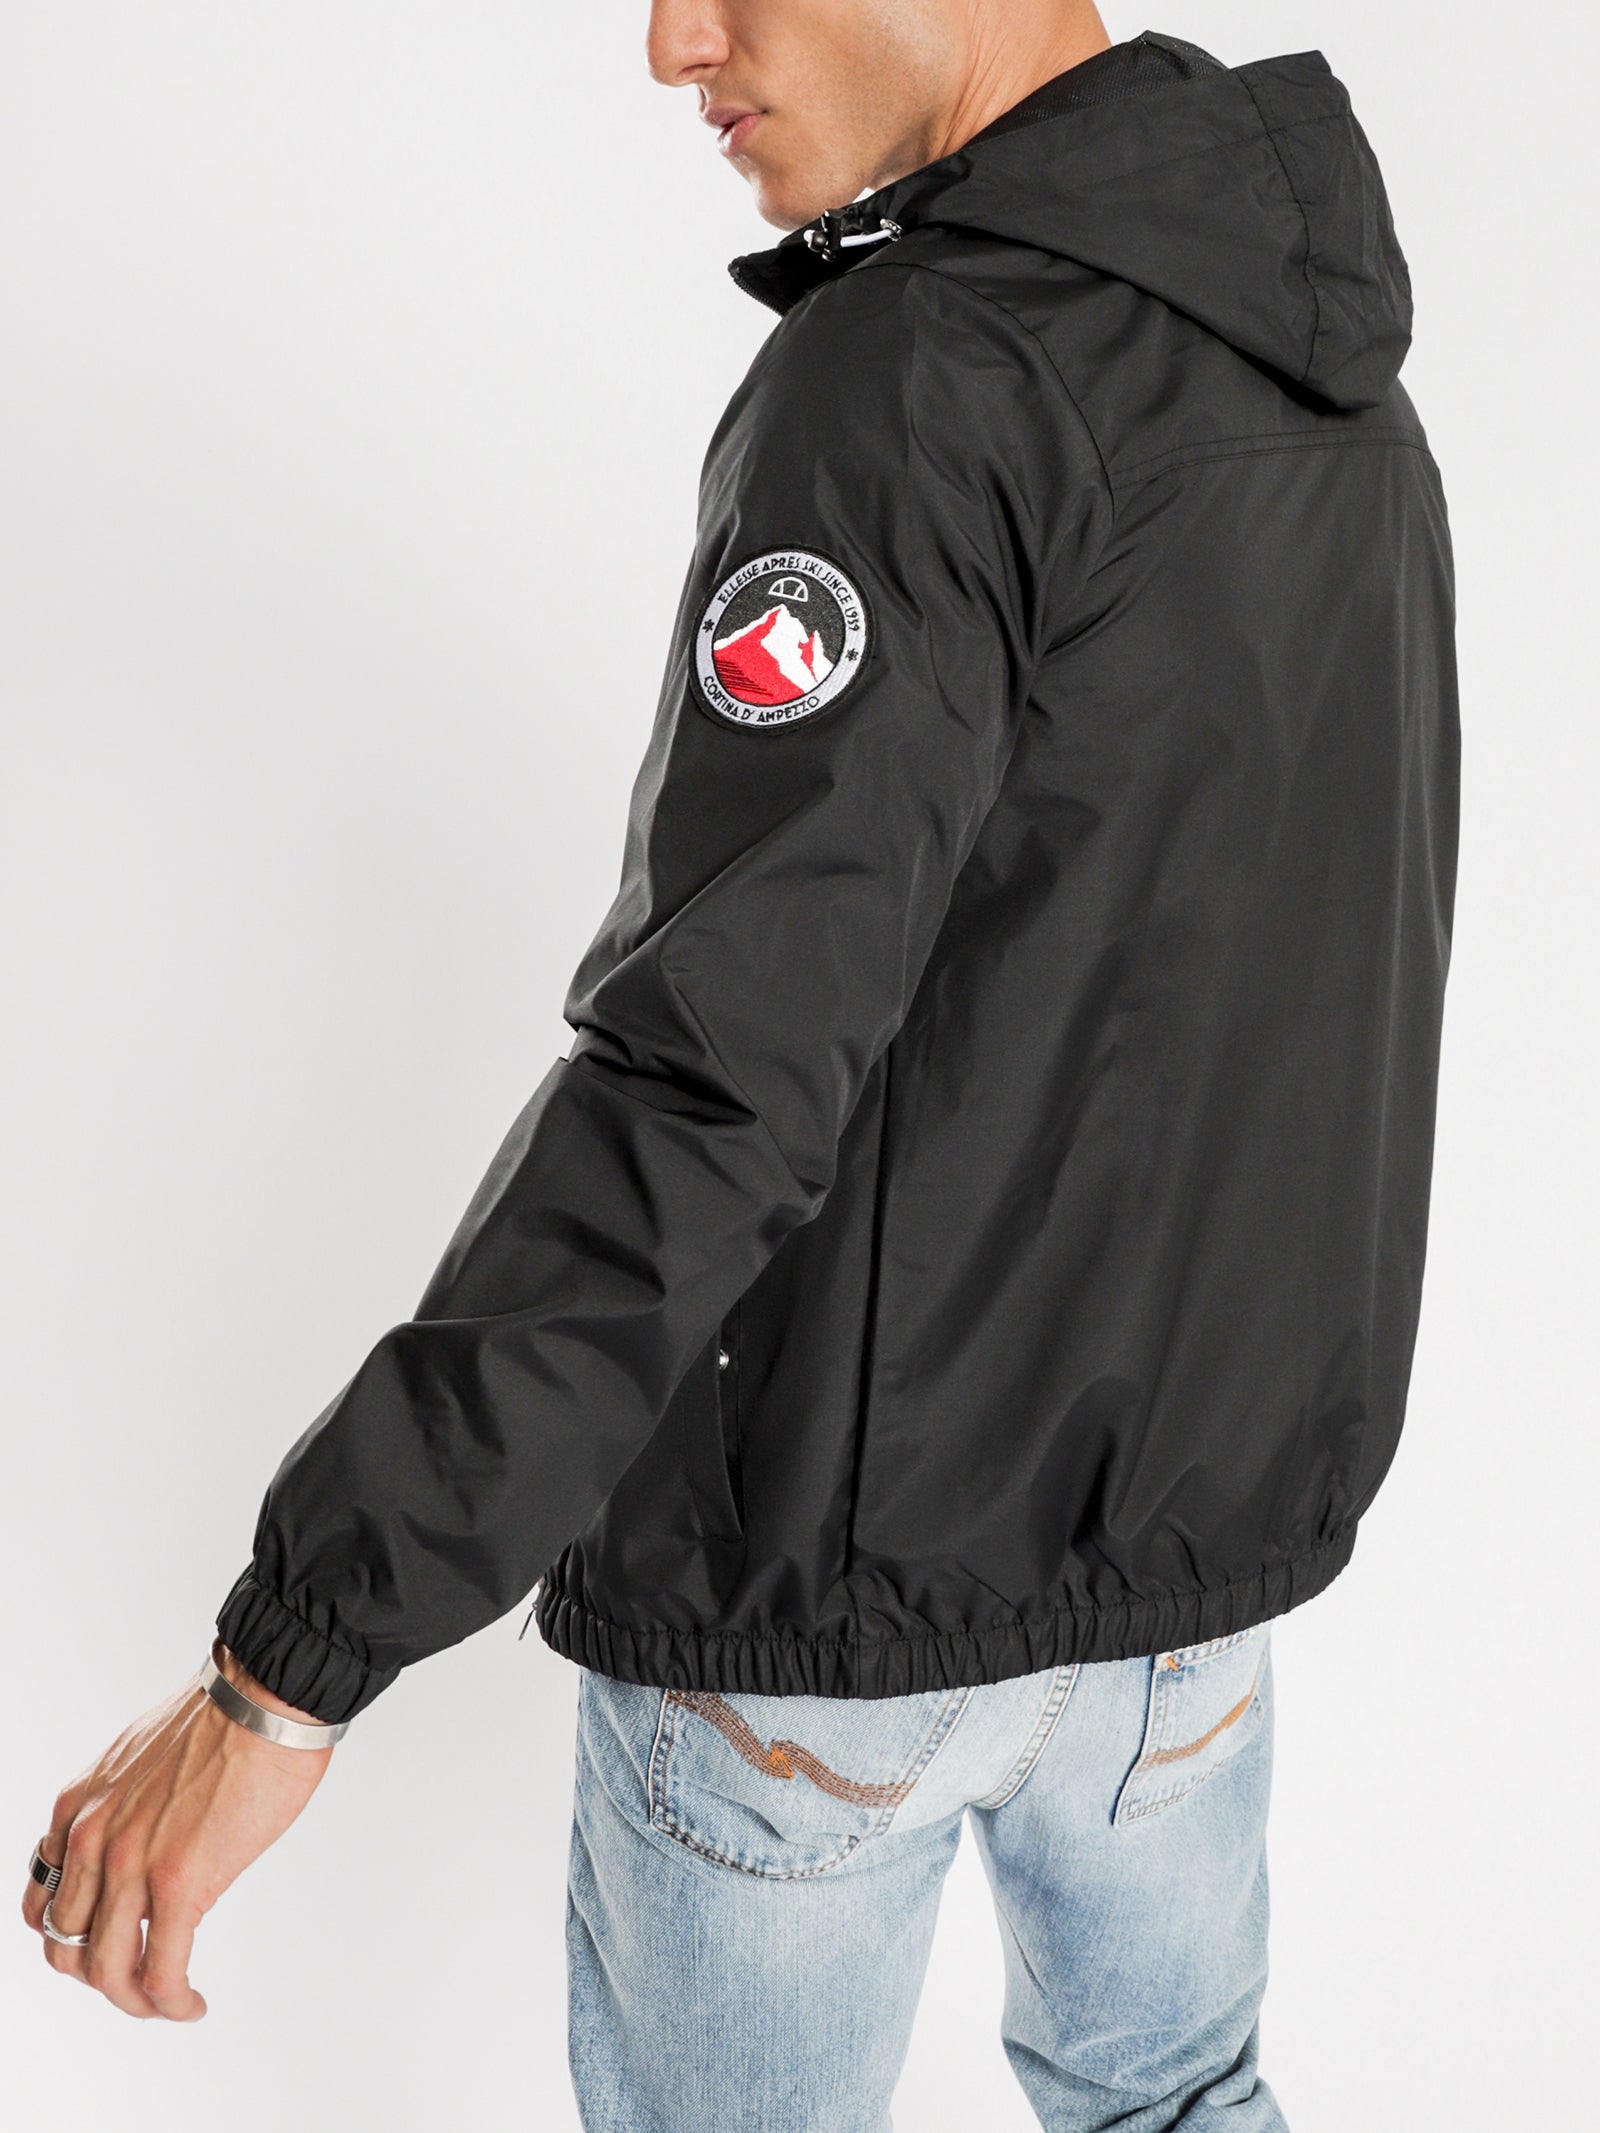 Terrazzo Jacket in Black - Glue Store